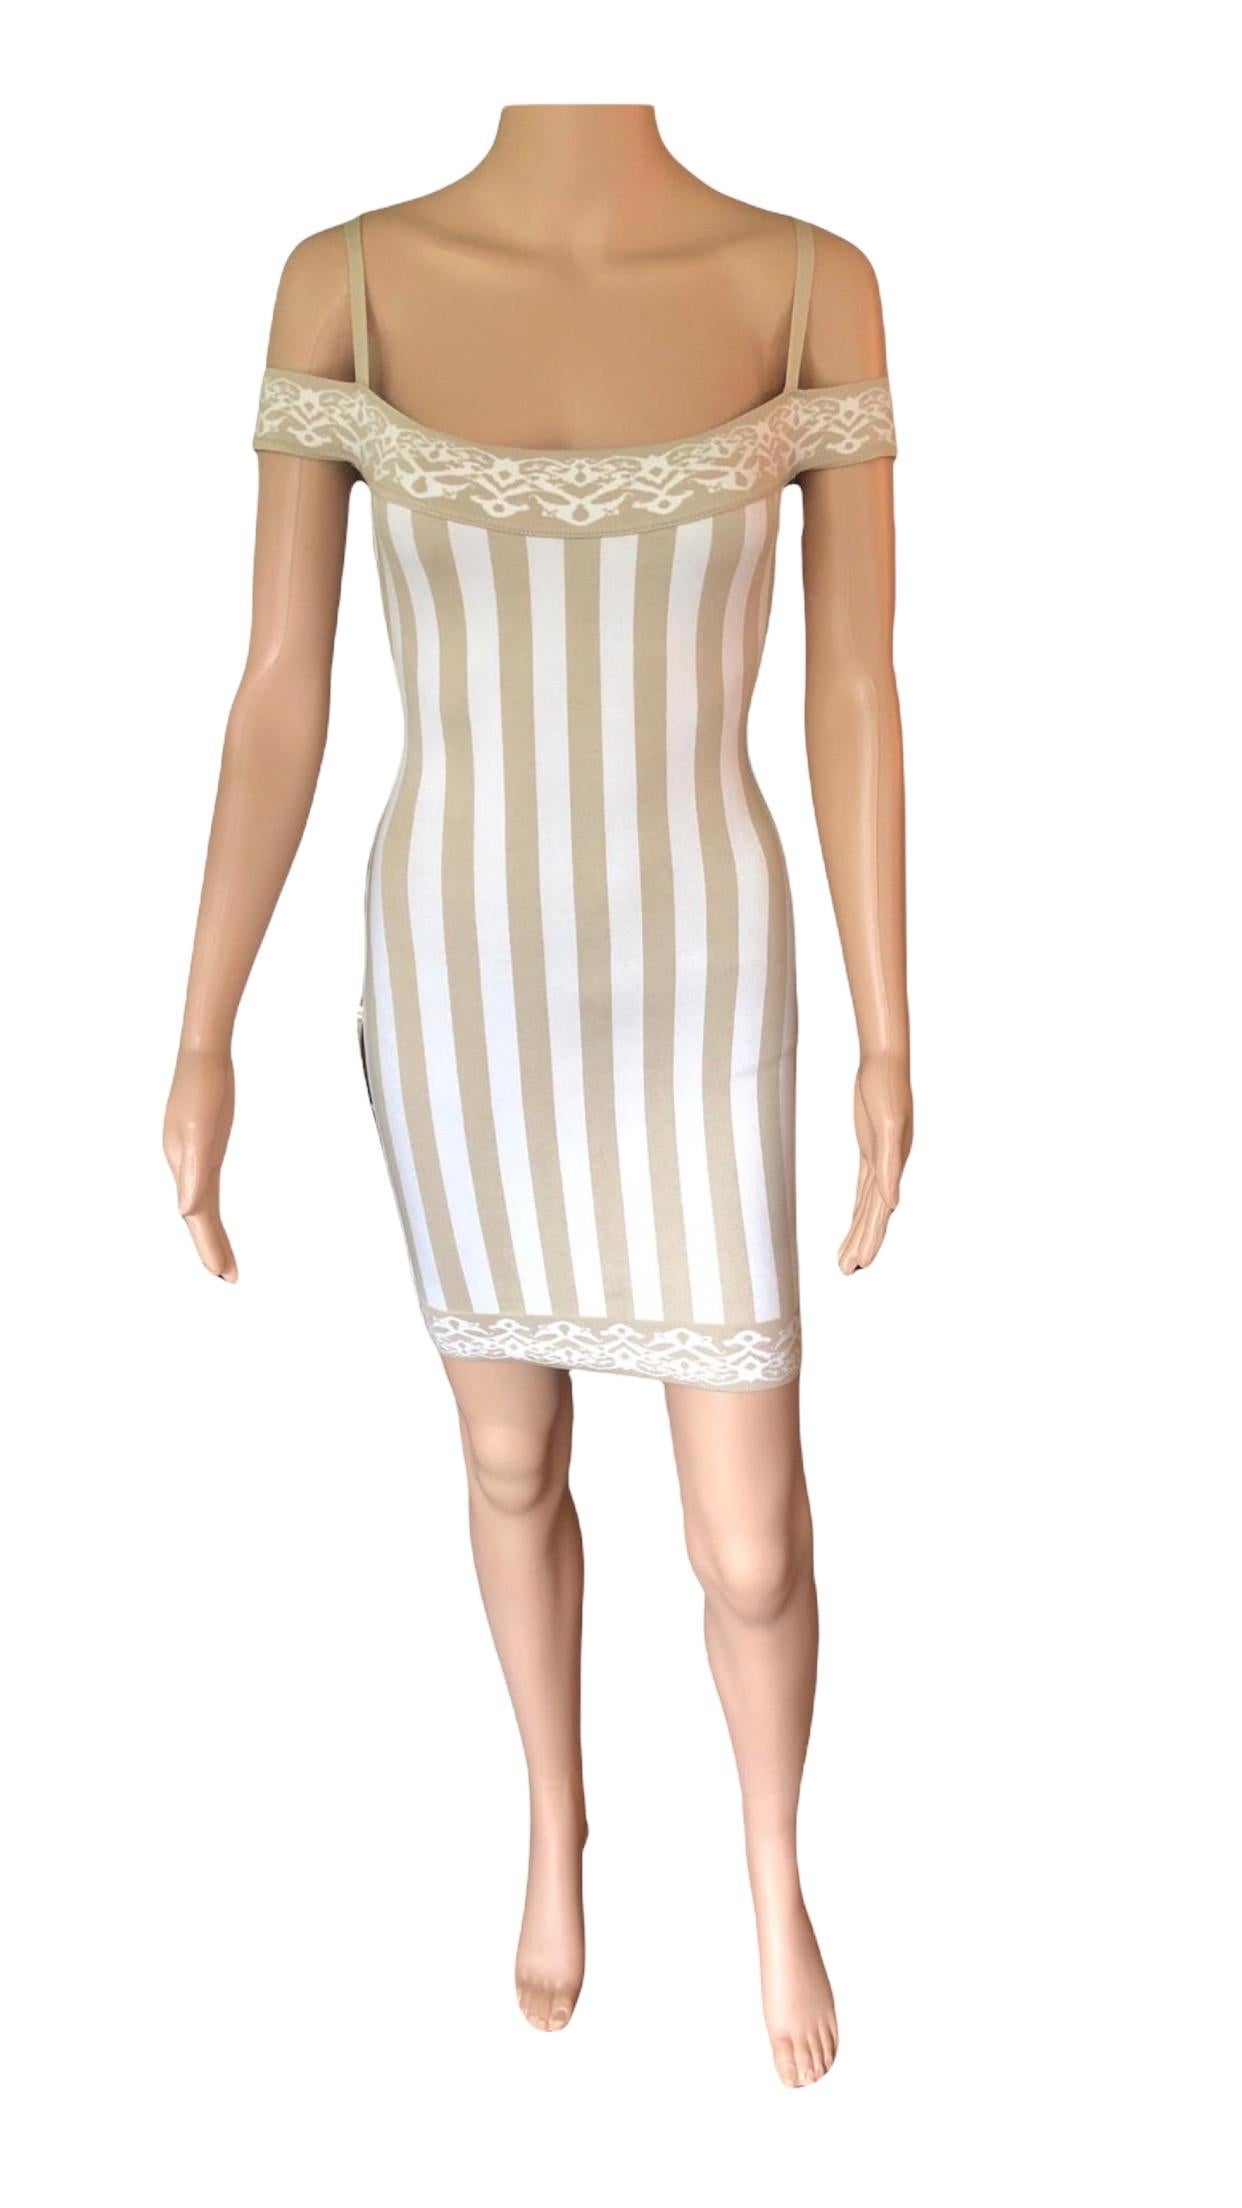 Azzedine Alaia S/S 1992 Vintage Cold-Shoulder Striped Bodycon Mini Dress For Sale 1